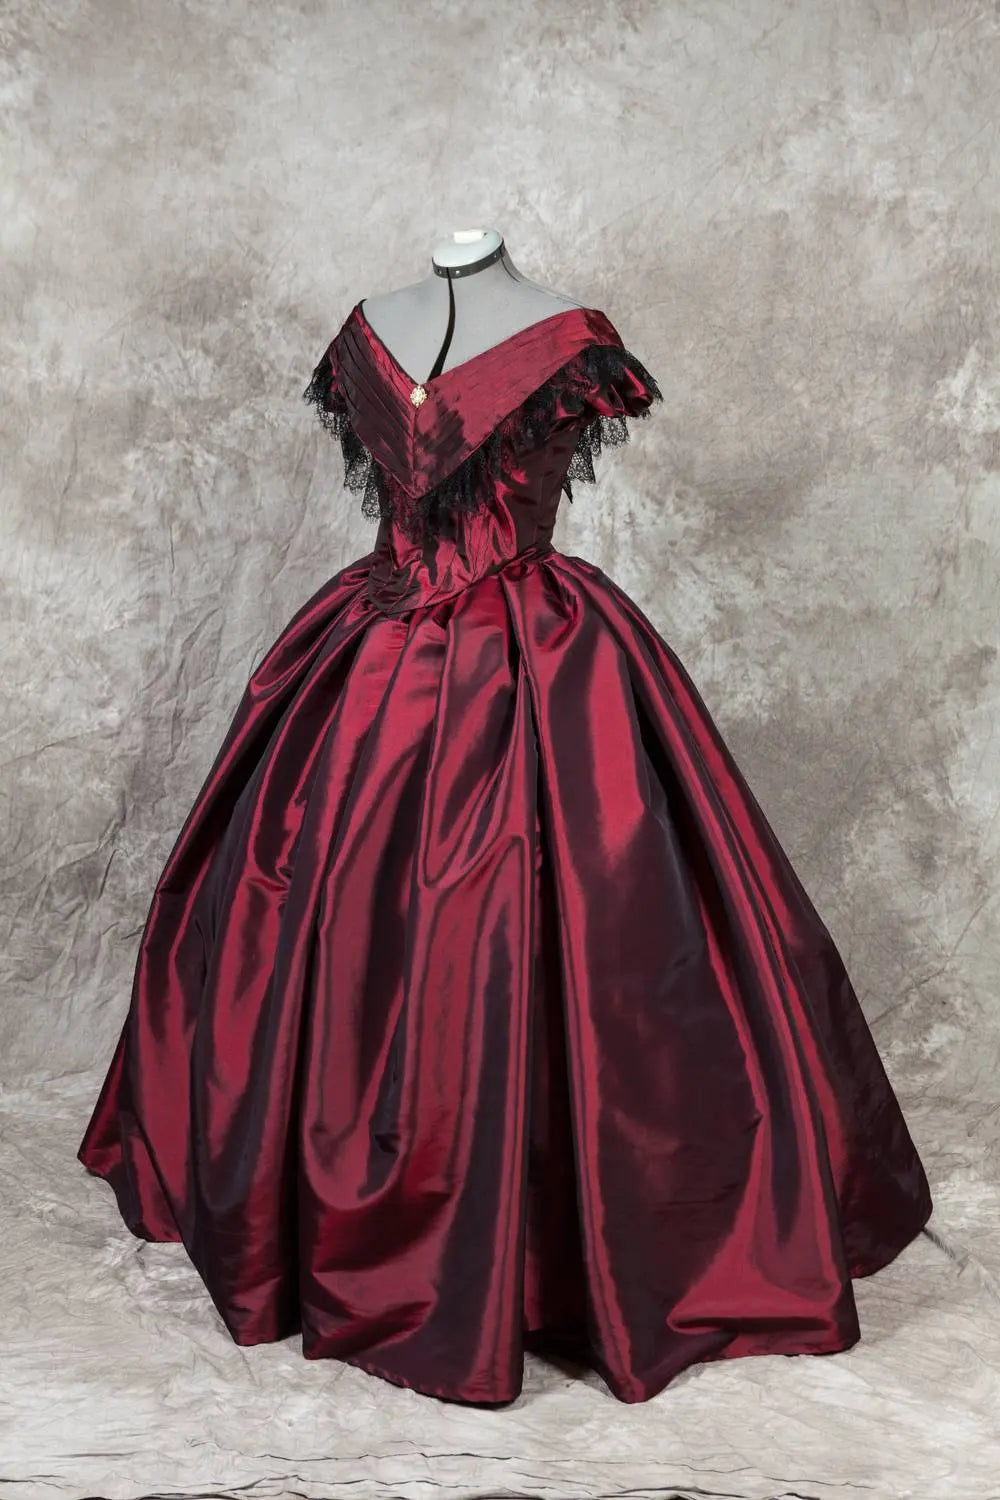 Off Shoulder 1860s Victorian Crinoline Sissi Civil War Costume Southern Belle Ball Gown Wedding Dress Robe Second Empire Dress